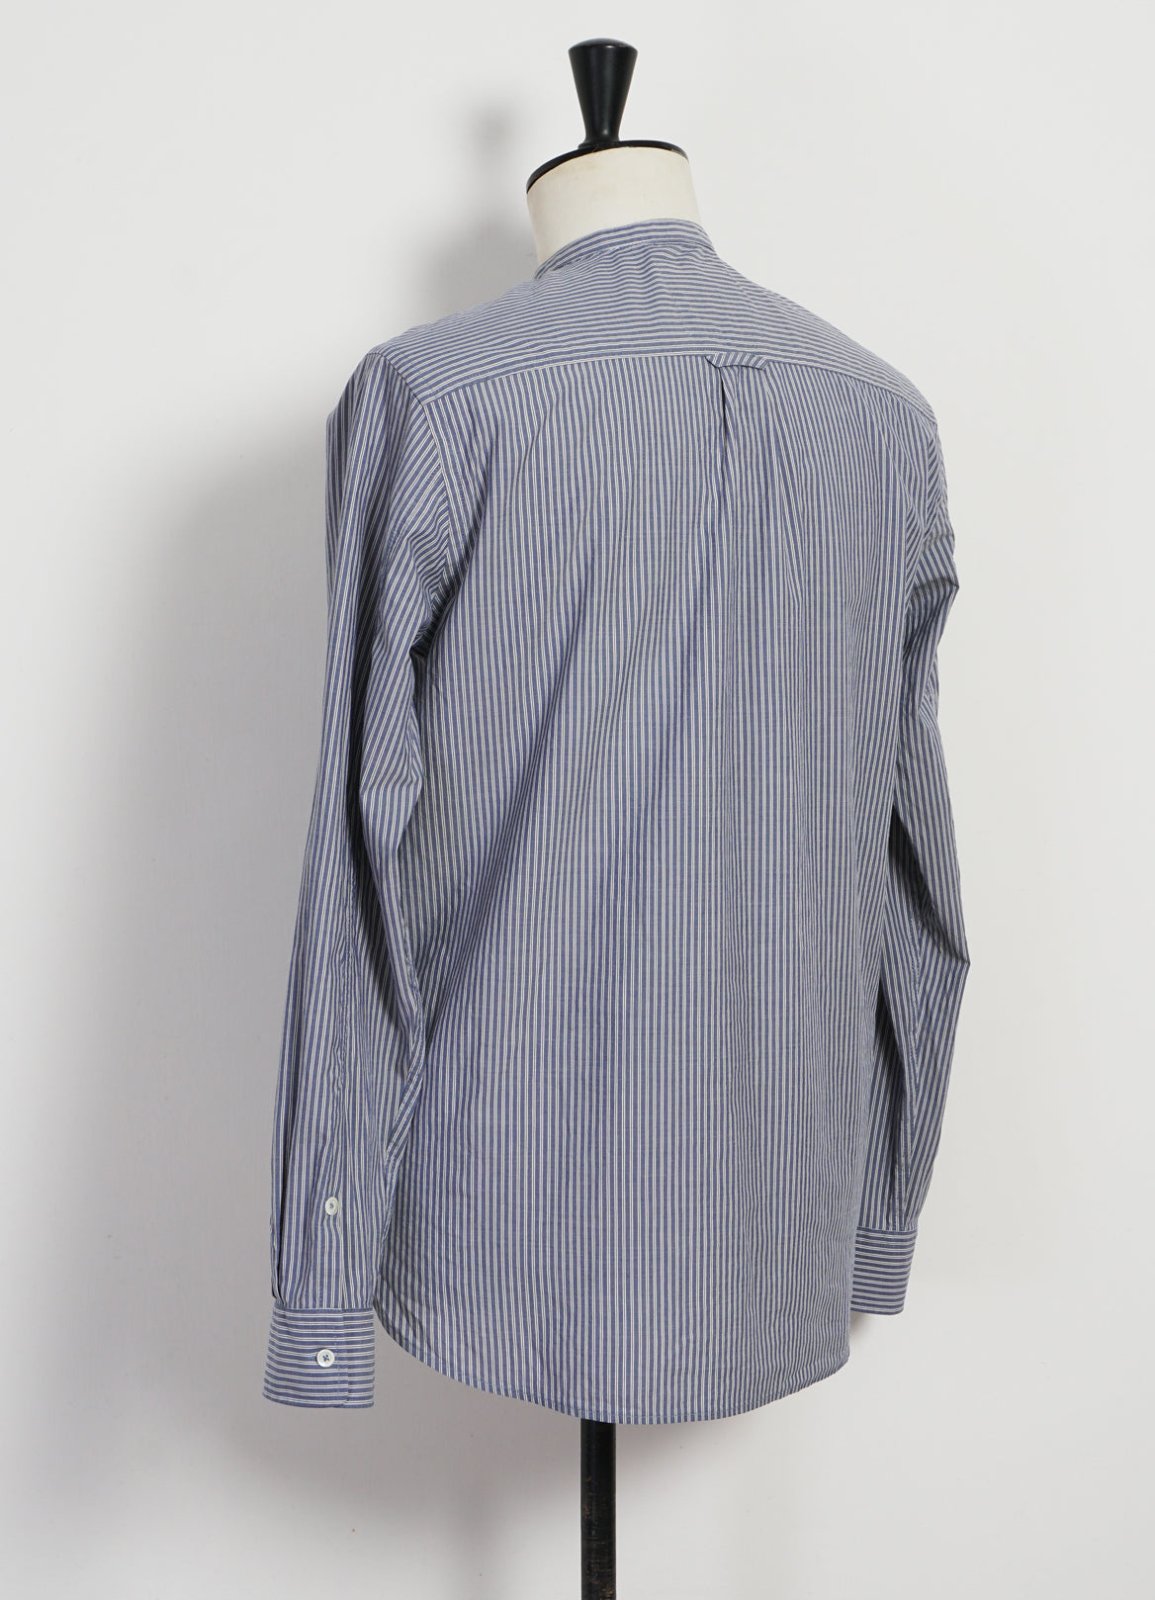 HANSEN GARMENTS - ANTE | Collarless Shirt | Small Blue Stripes - HANSEN Garments